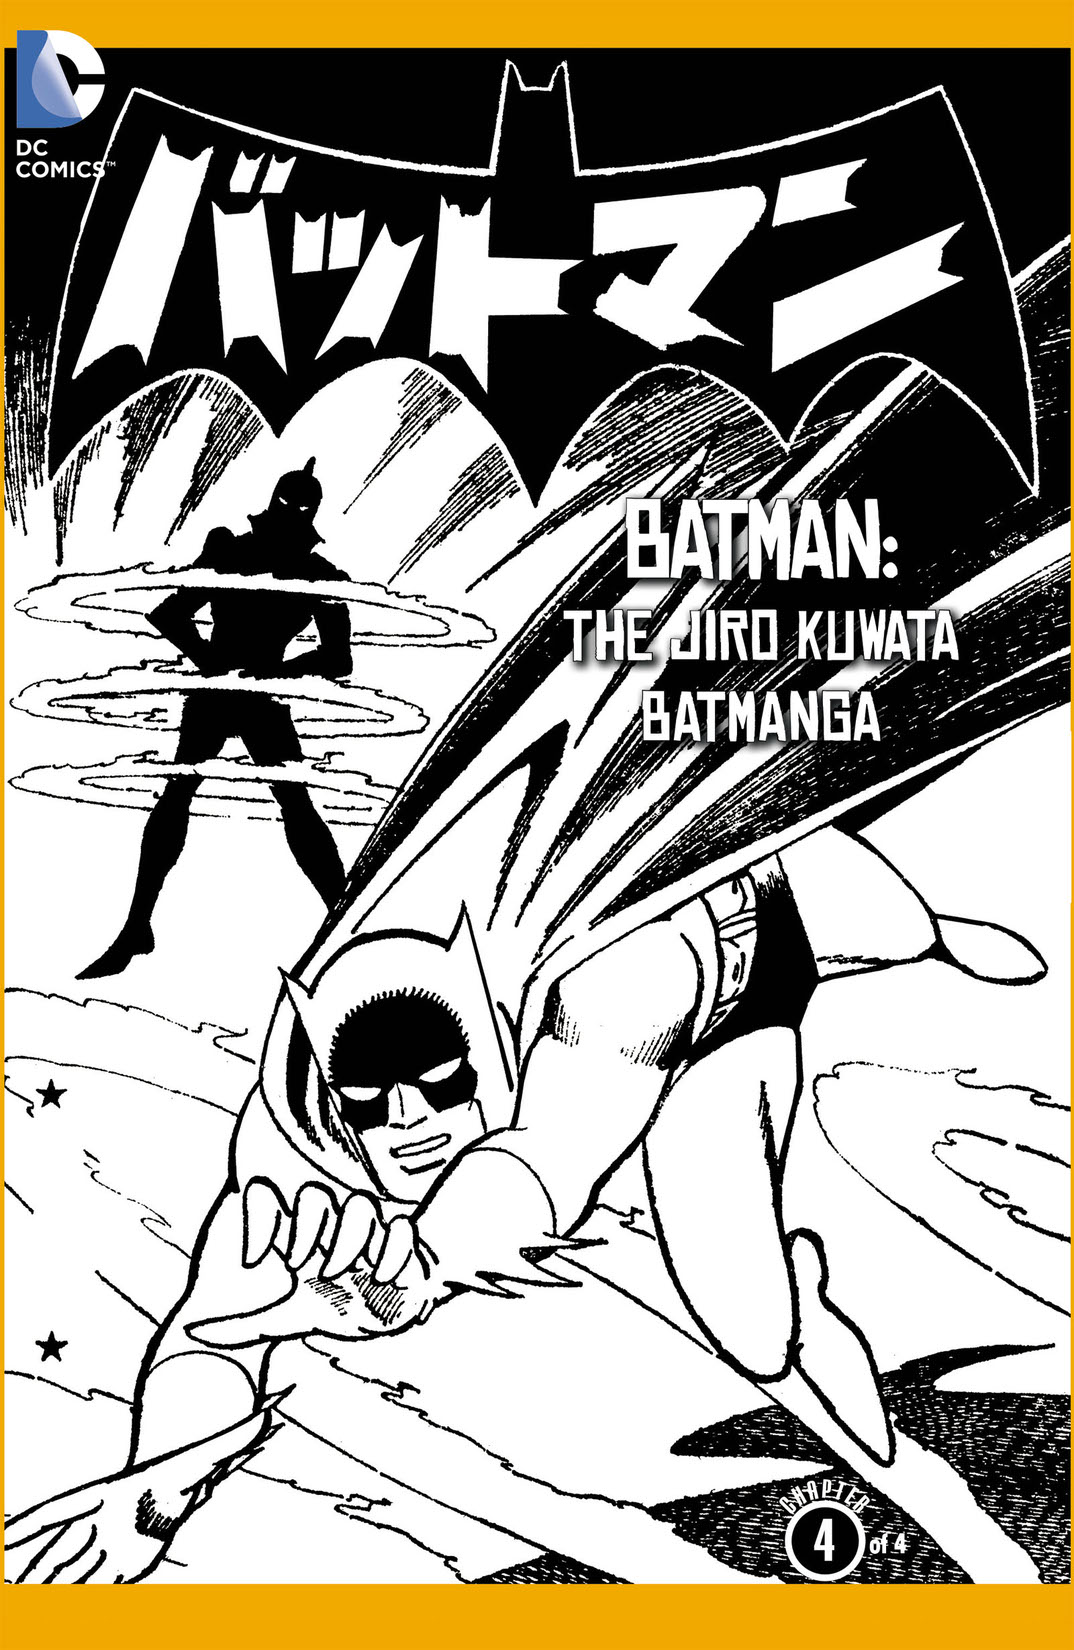 Batman: The Jiro Kuwata Batmanga #43 preview images